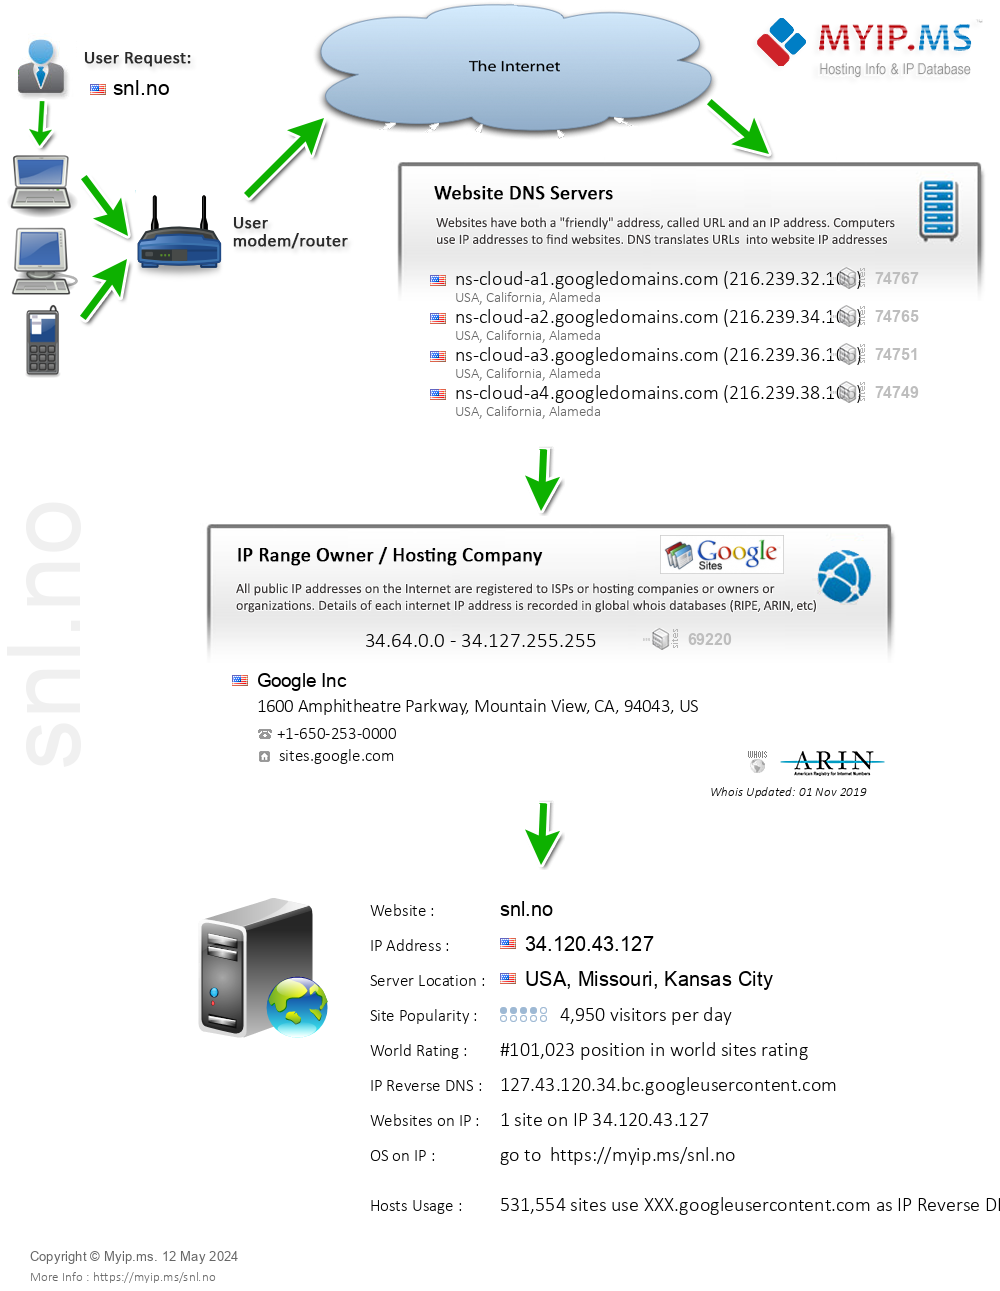 Snl.no - Website Hosting Visual IP Diagram